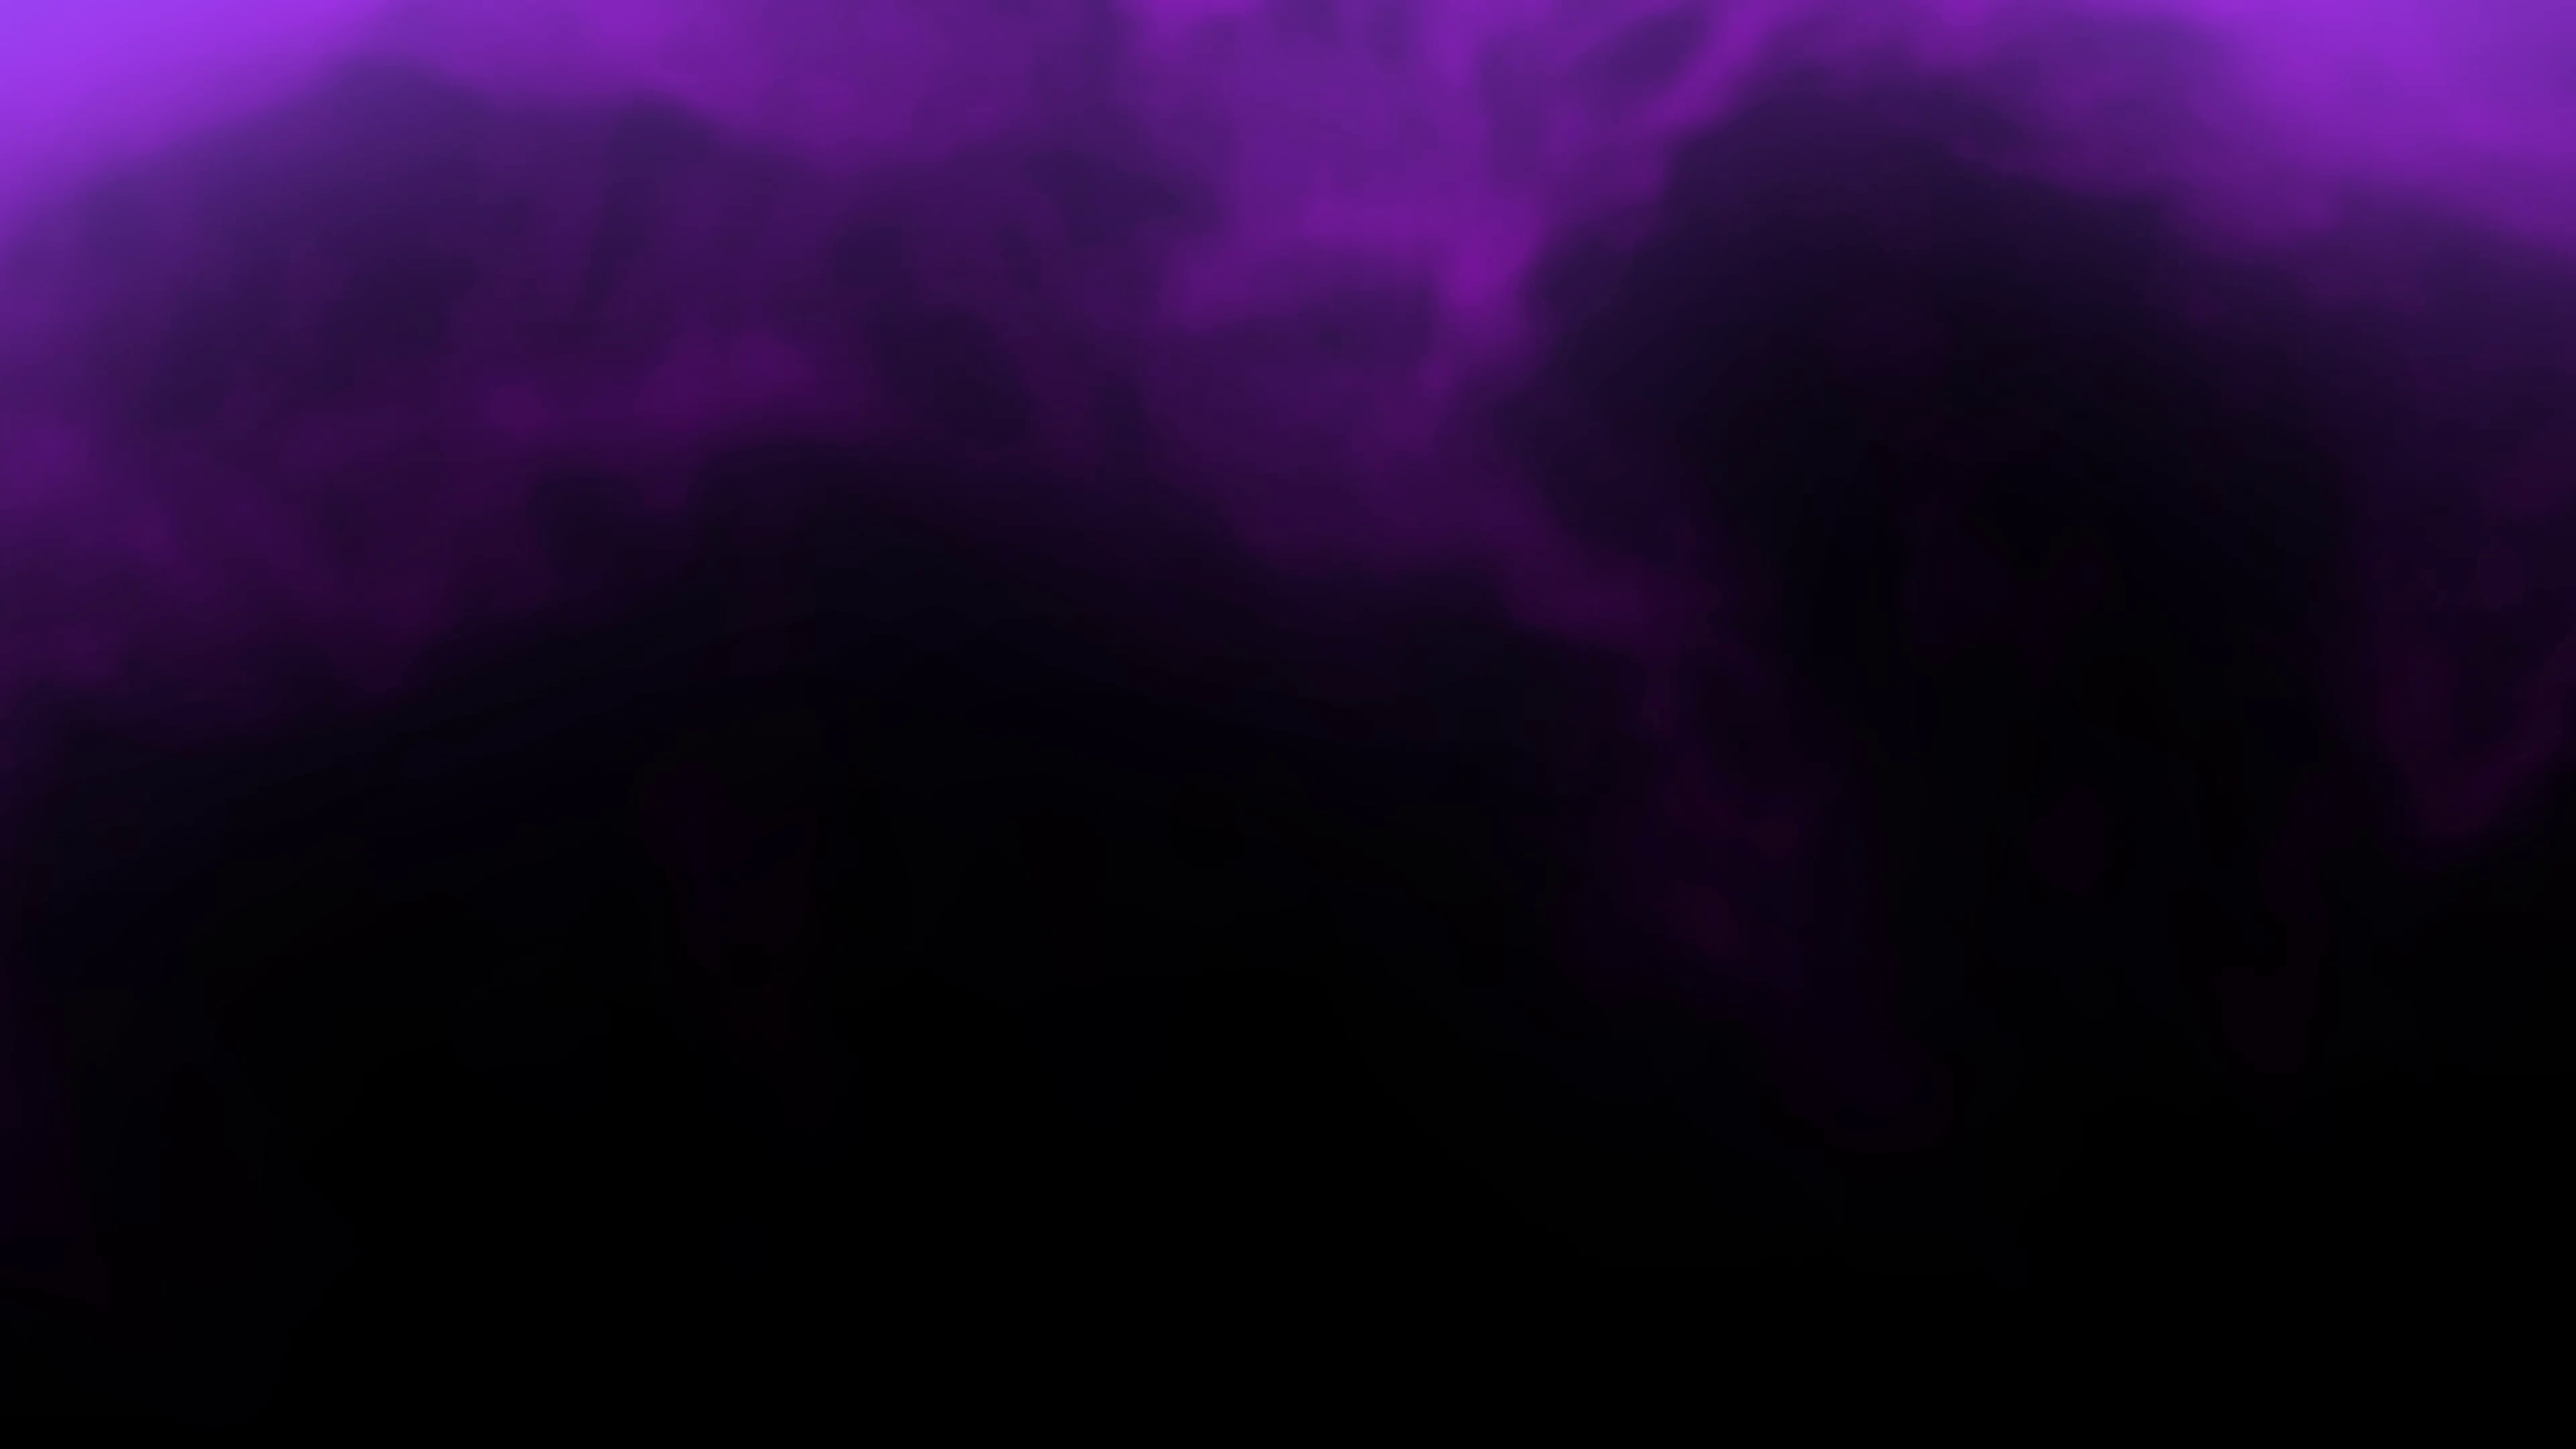 Free photo: Purple smoke background - Abstract, Black, Isolated - Free